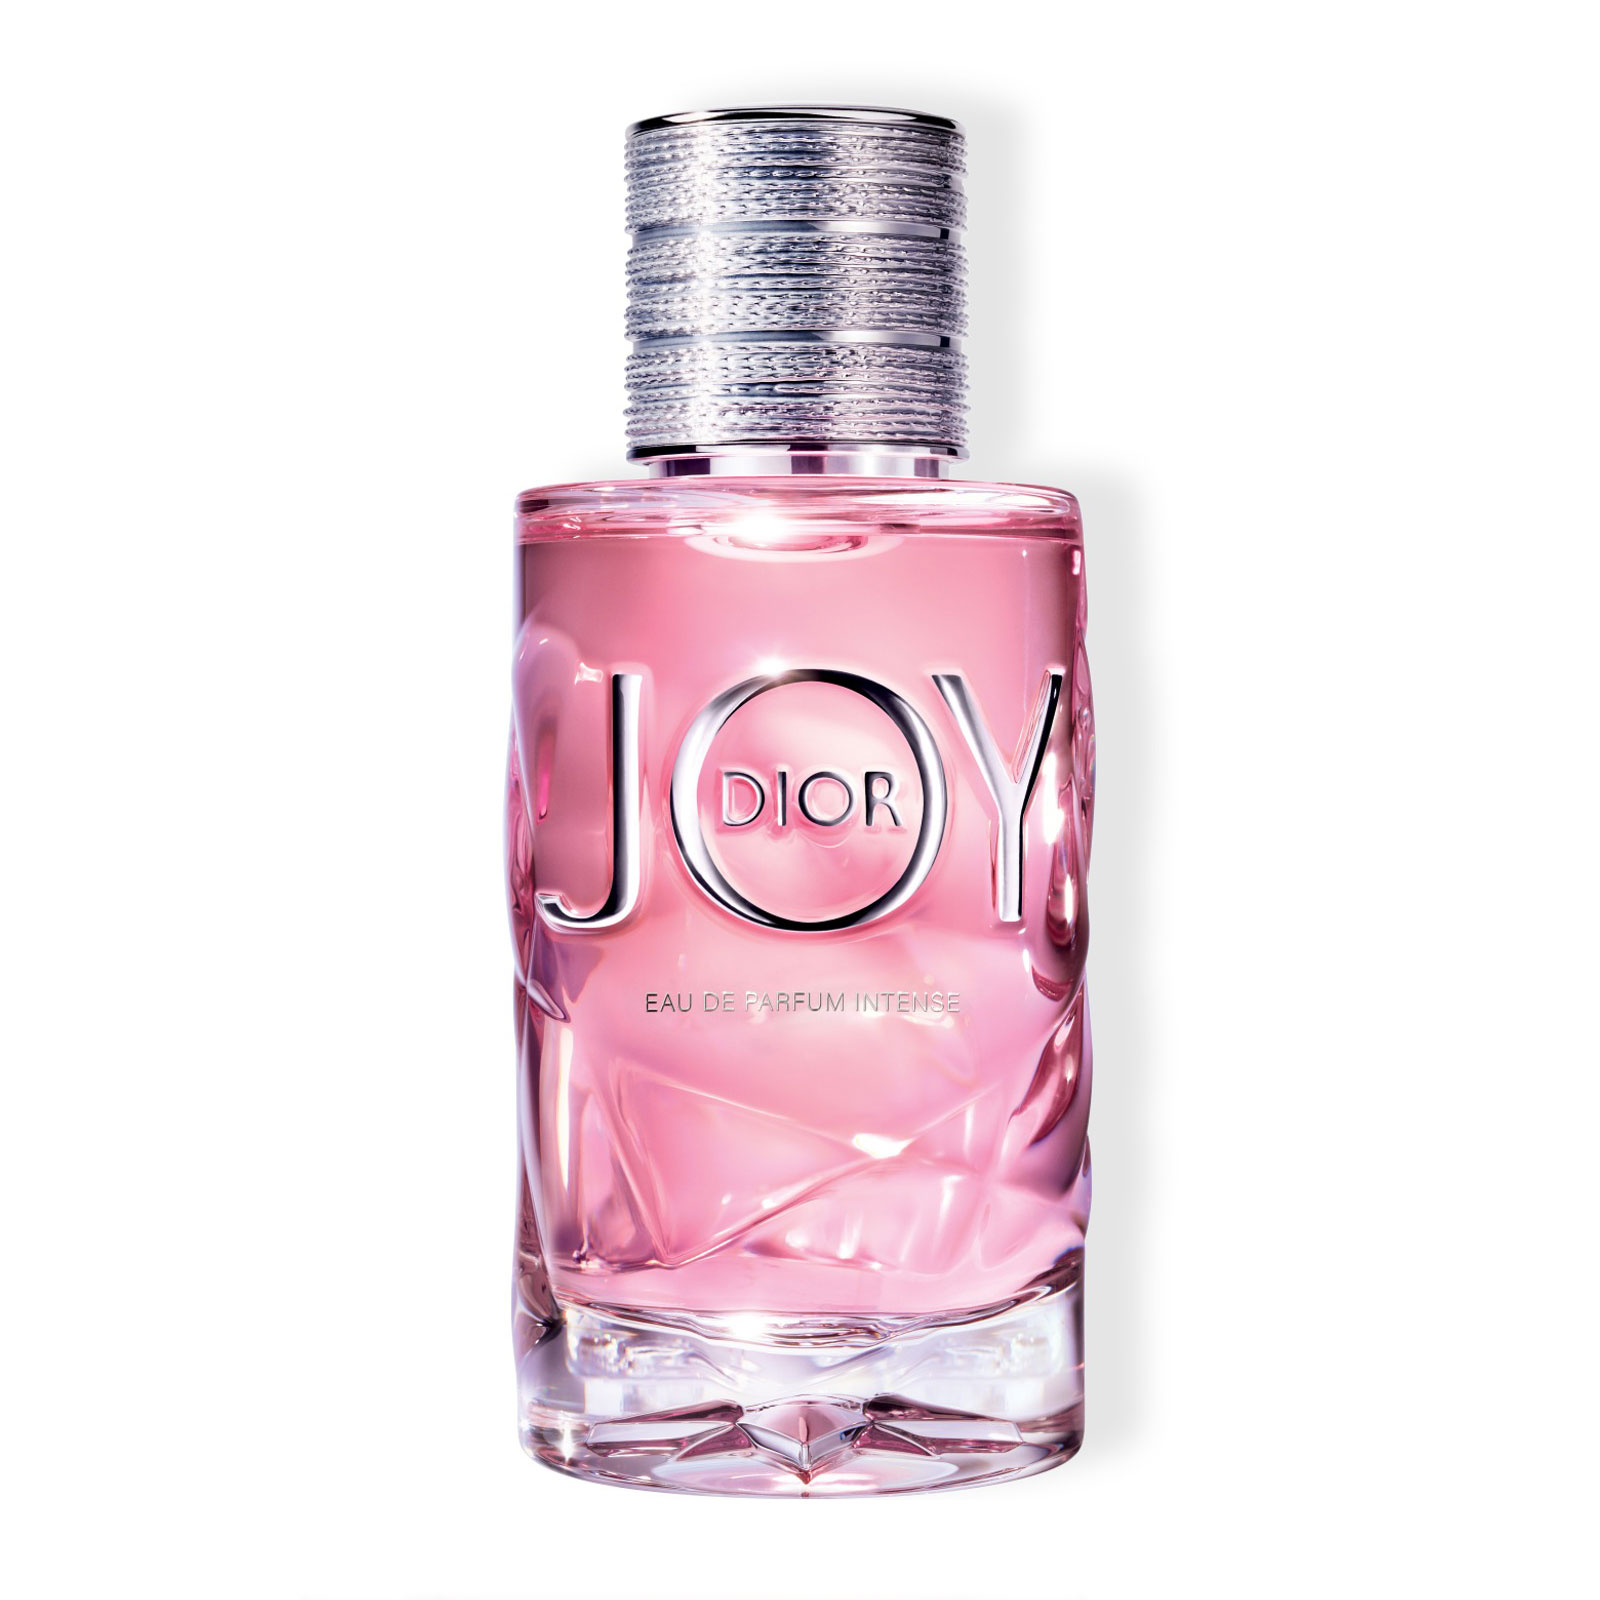 DIOR JOY by Dior Eau de Parfum Intense 30ml